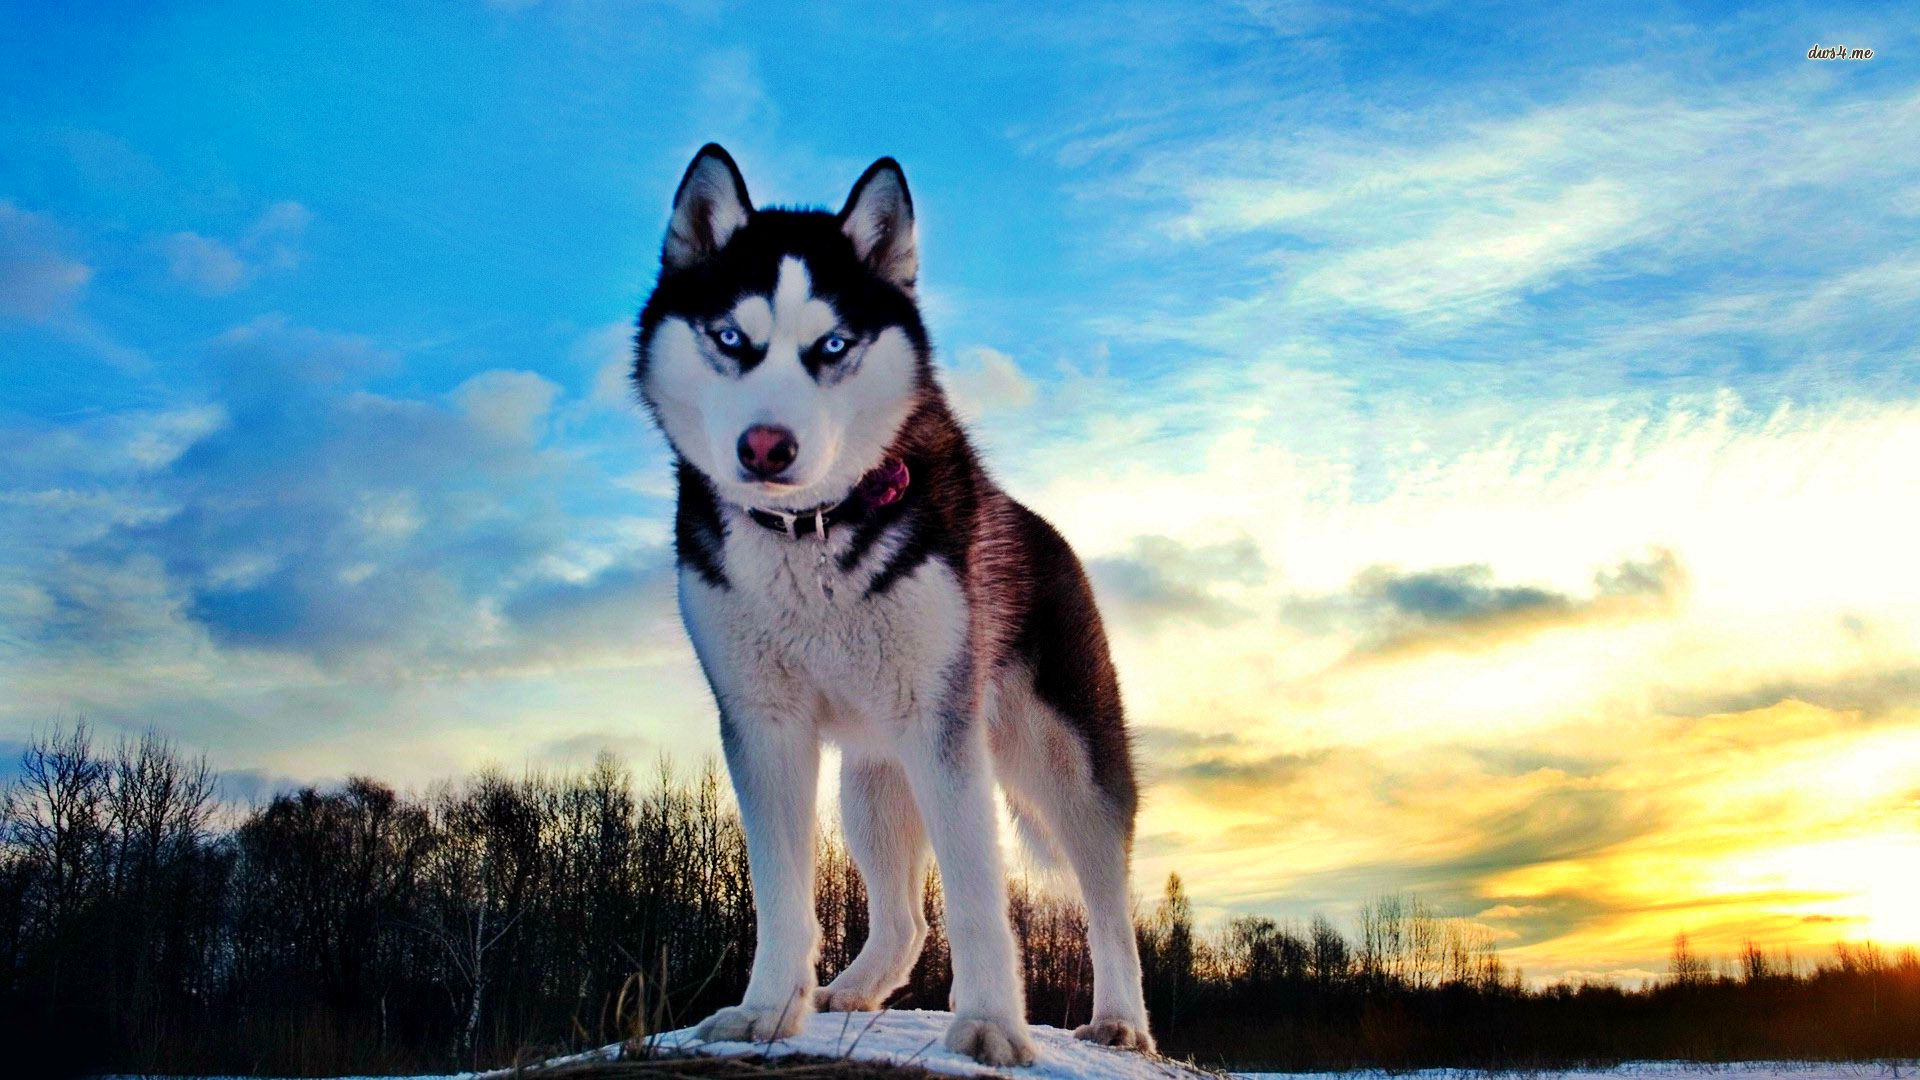 sfondi per cani fantastici,husky siberiano,cane,sakhalin husky,alaskan malamute,cane eschimese canadese